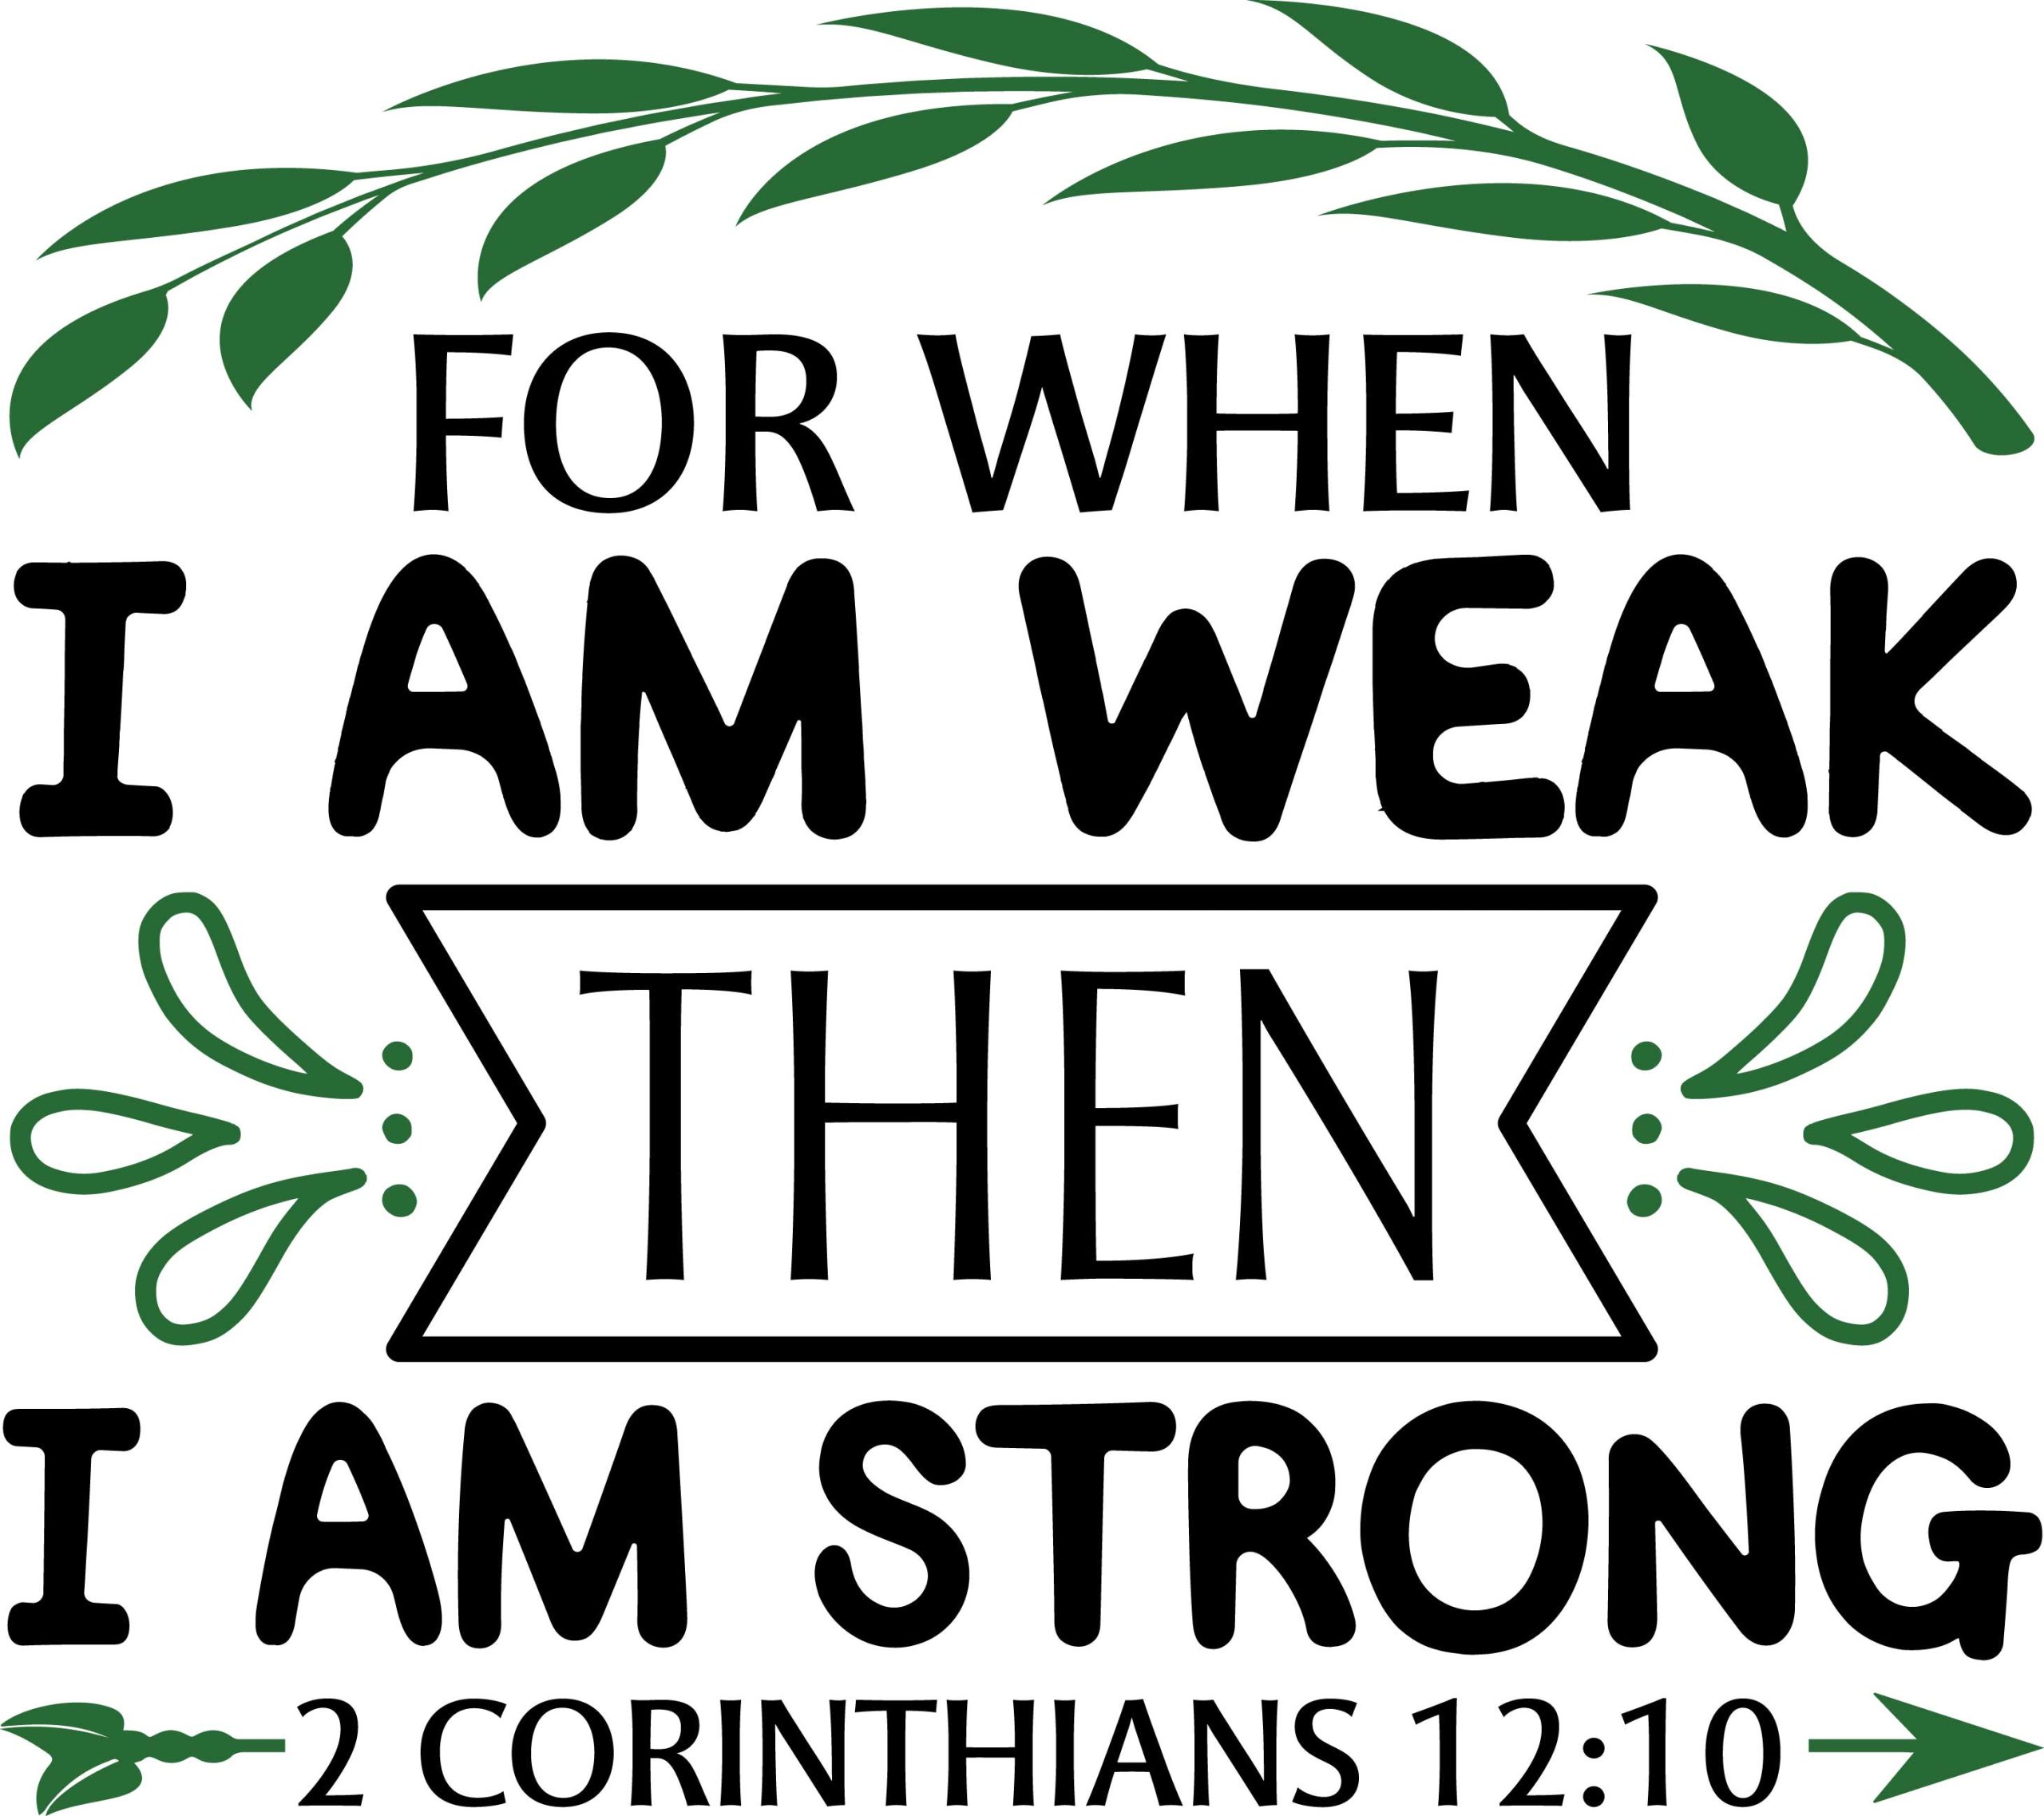 For when i am weak then i am strong 2 Corinthians 12:10, bible verses, scripture verses, svg files, passages, sayings, cricut designs, silhouette, embroidery, bundle, free cut files, design space, vector